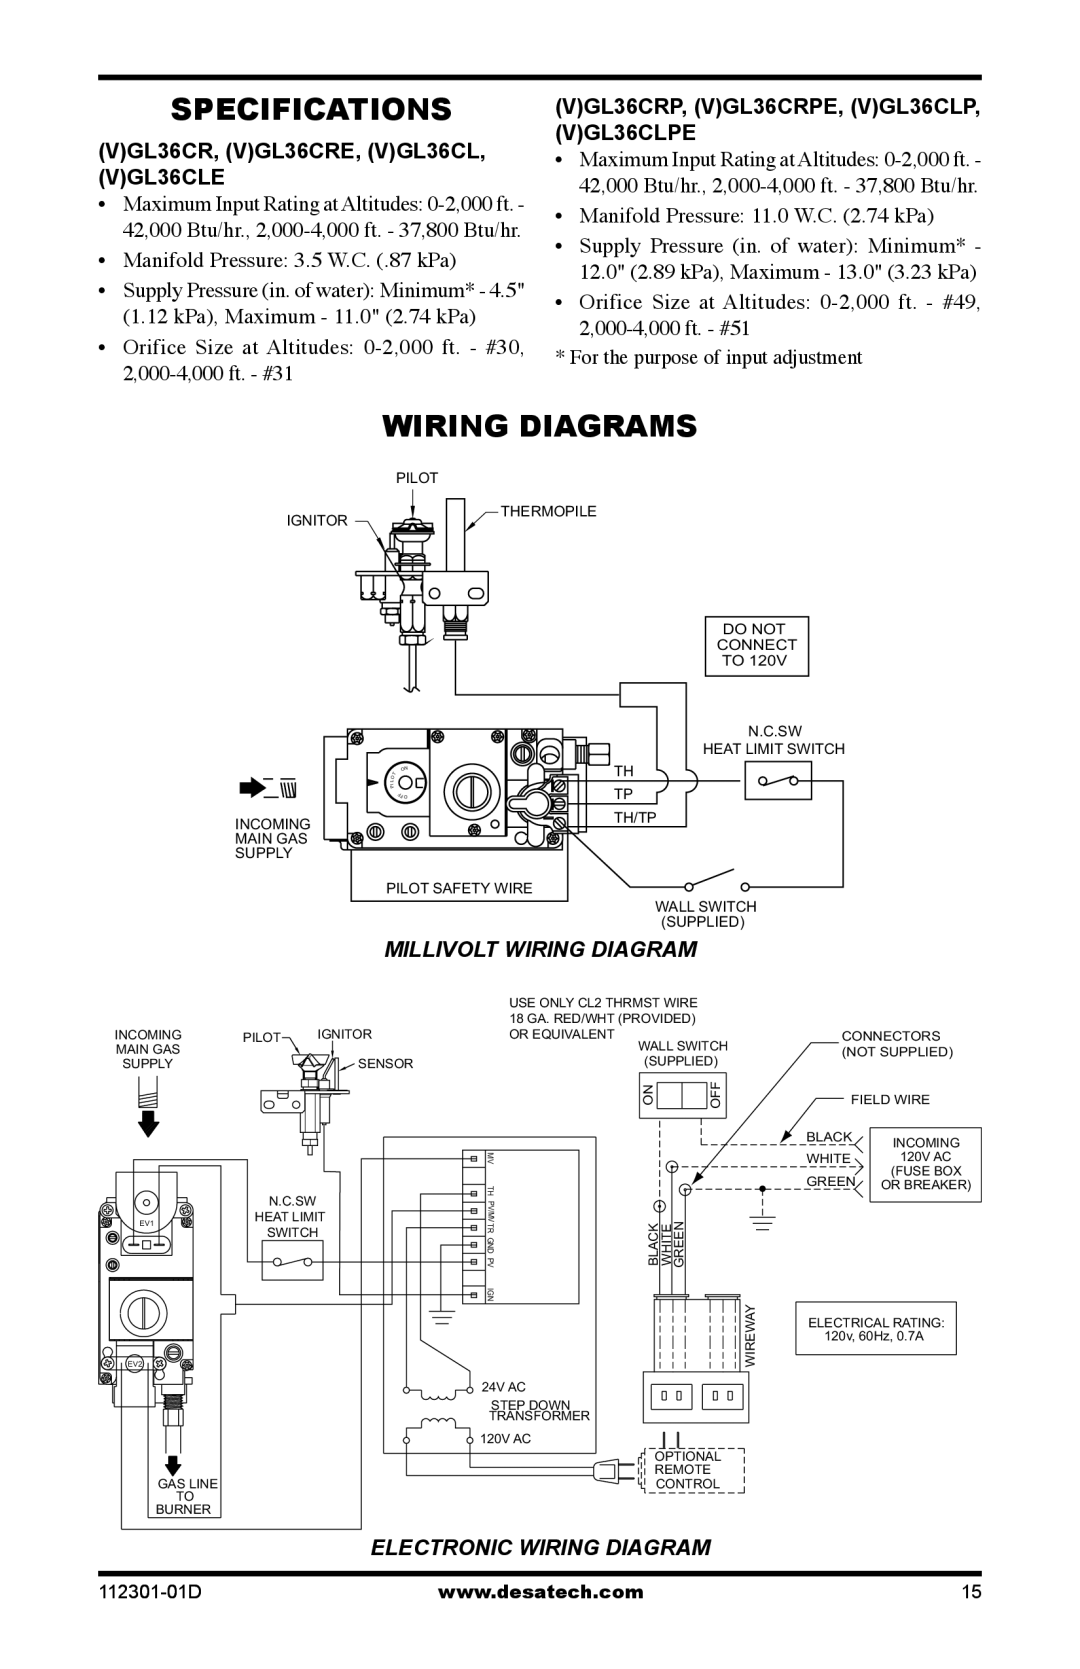 Desa GL36CLP, GL36CRP Specifications, Wiring Diagrams, millivolt wiring diagram, Electronic wiring diagram 